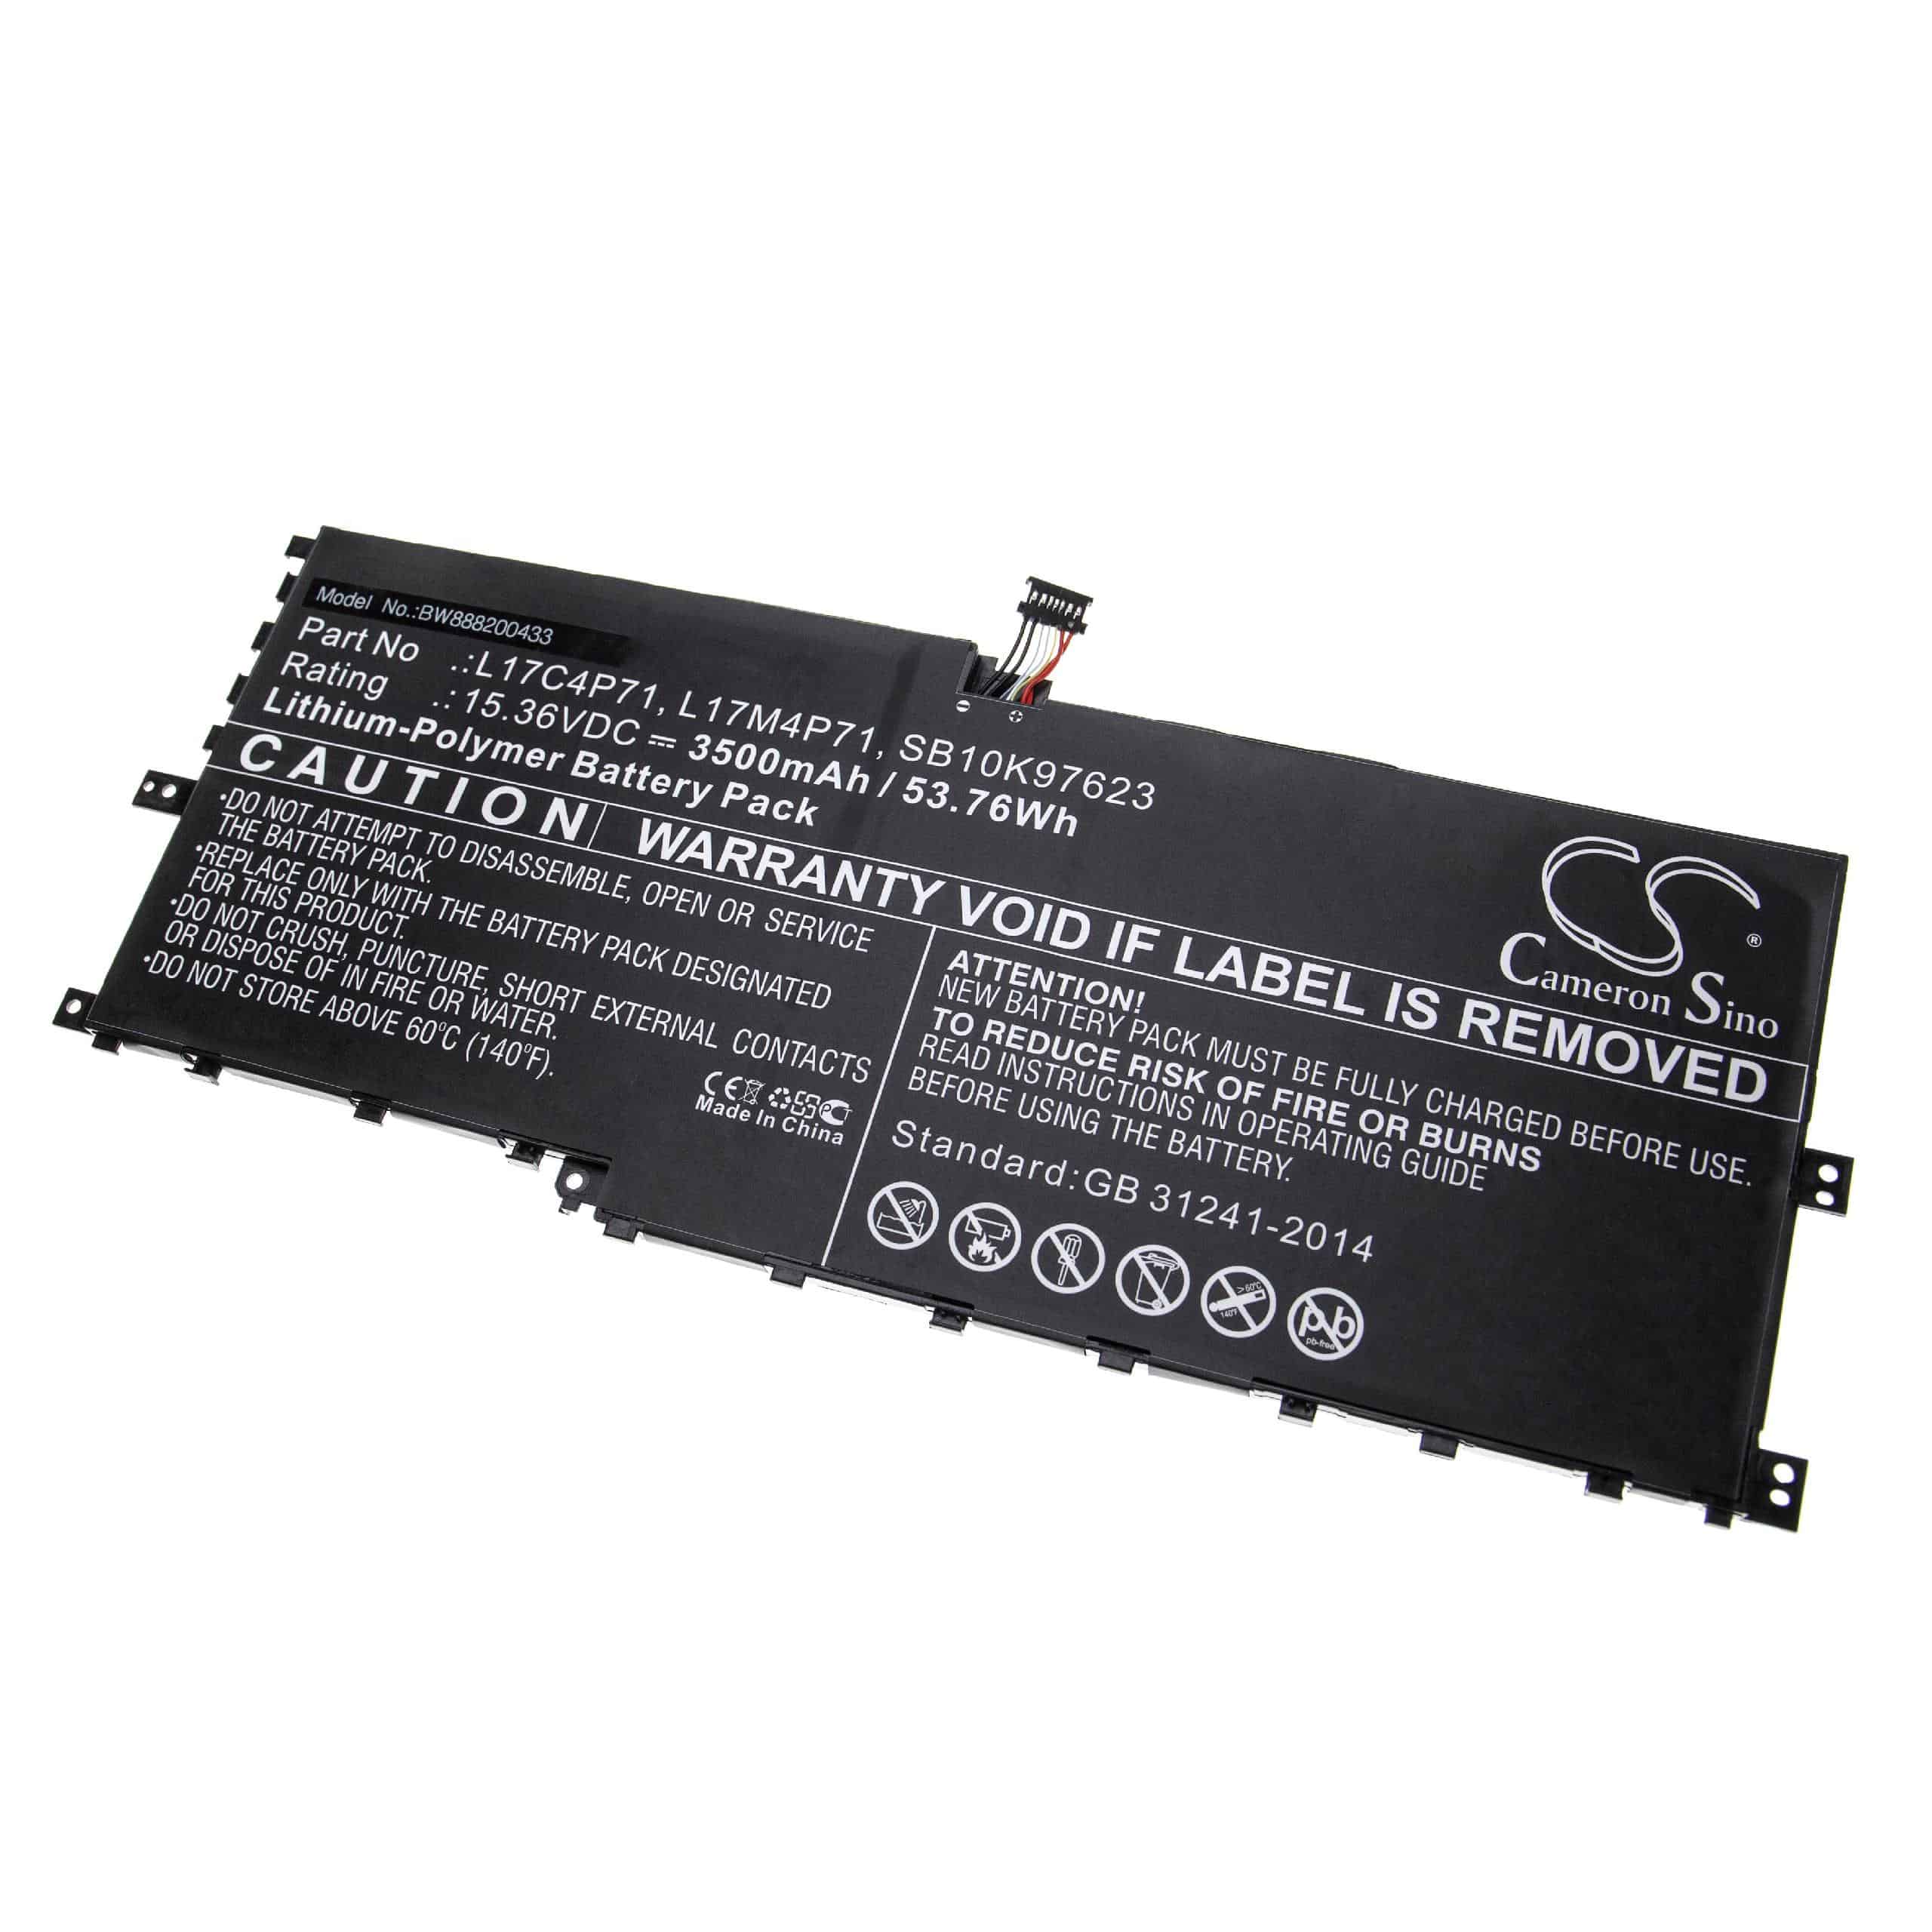 Batterie remplace Lenovo L17C4P71, 01AV474, 01AV475 pour ordinateur portable - 3500mAh 15,36V Li-polymère